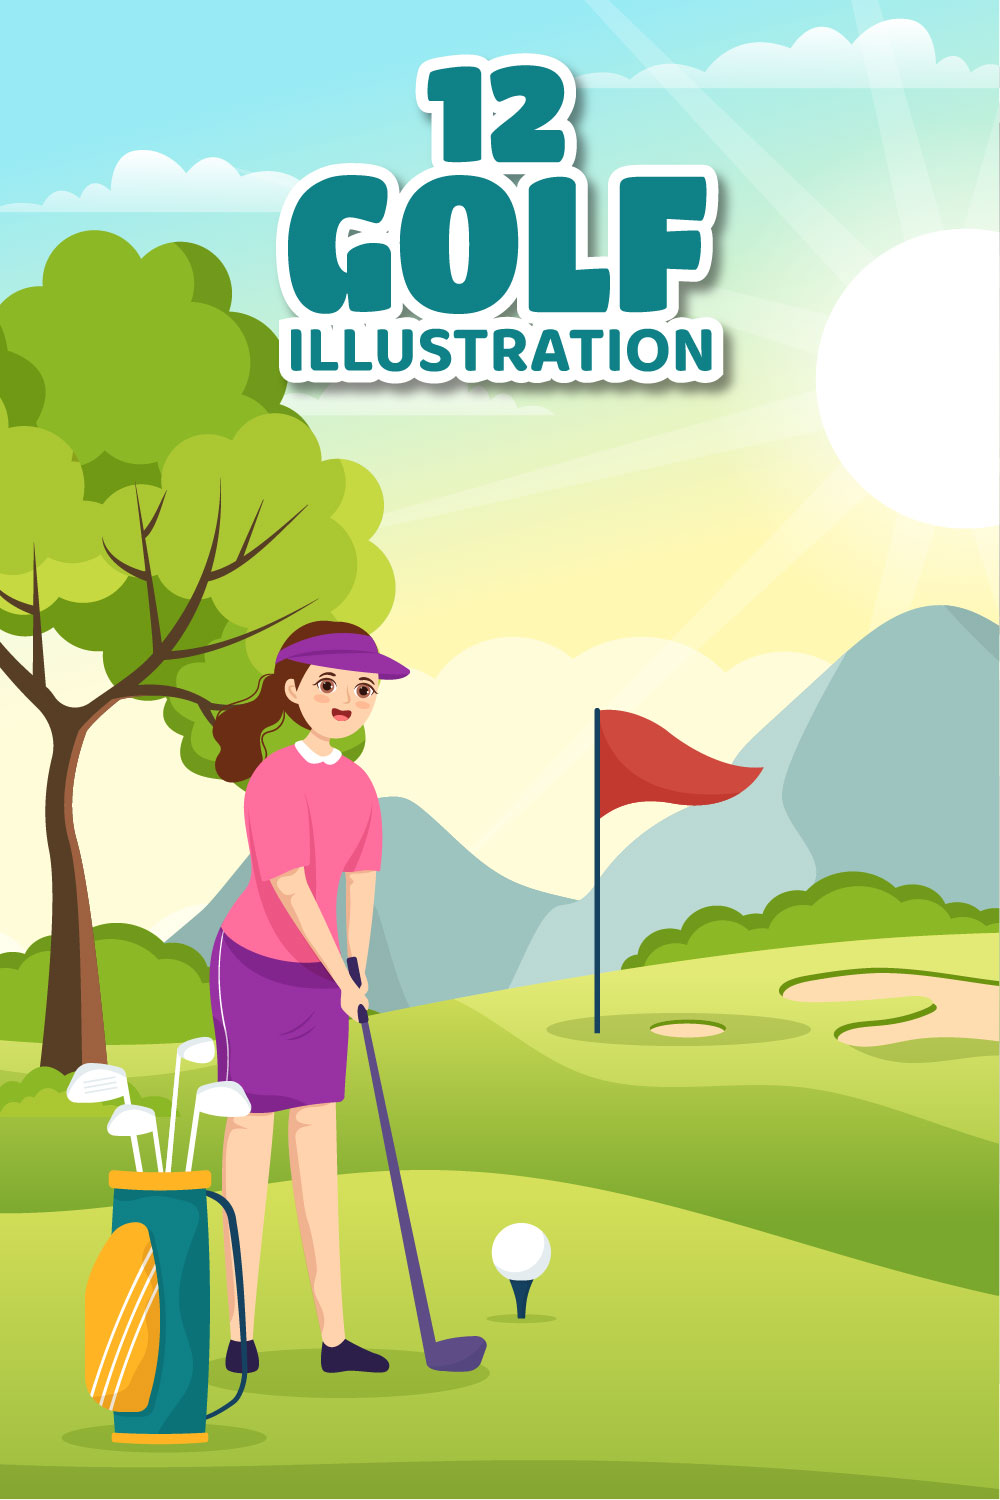 Golf Sport Graphics Design pinterest image.